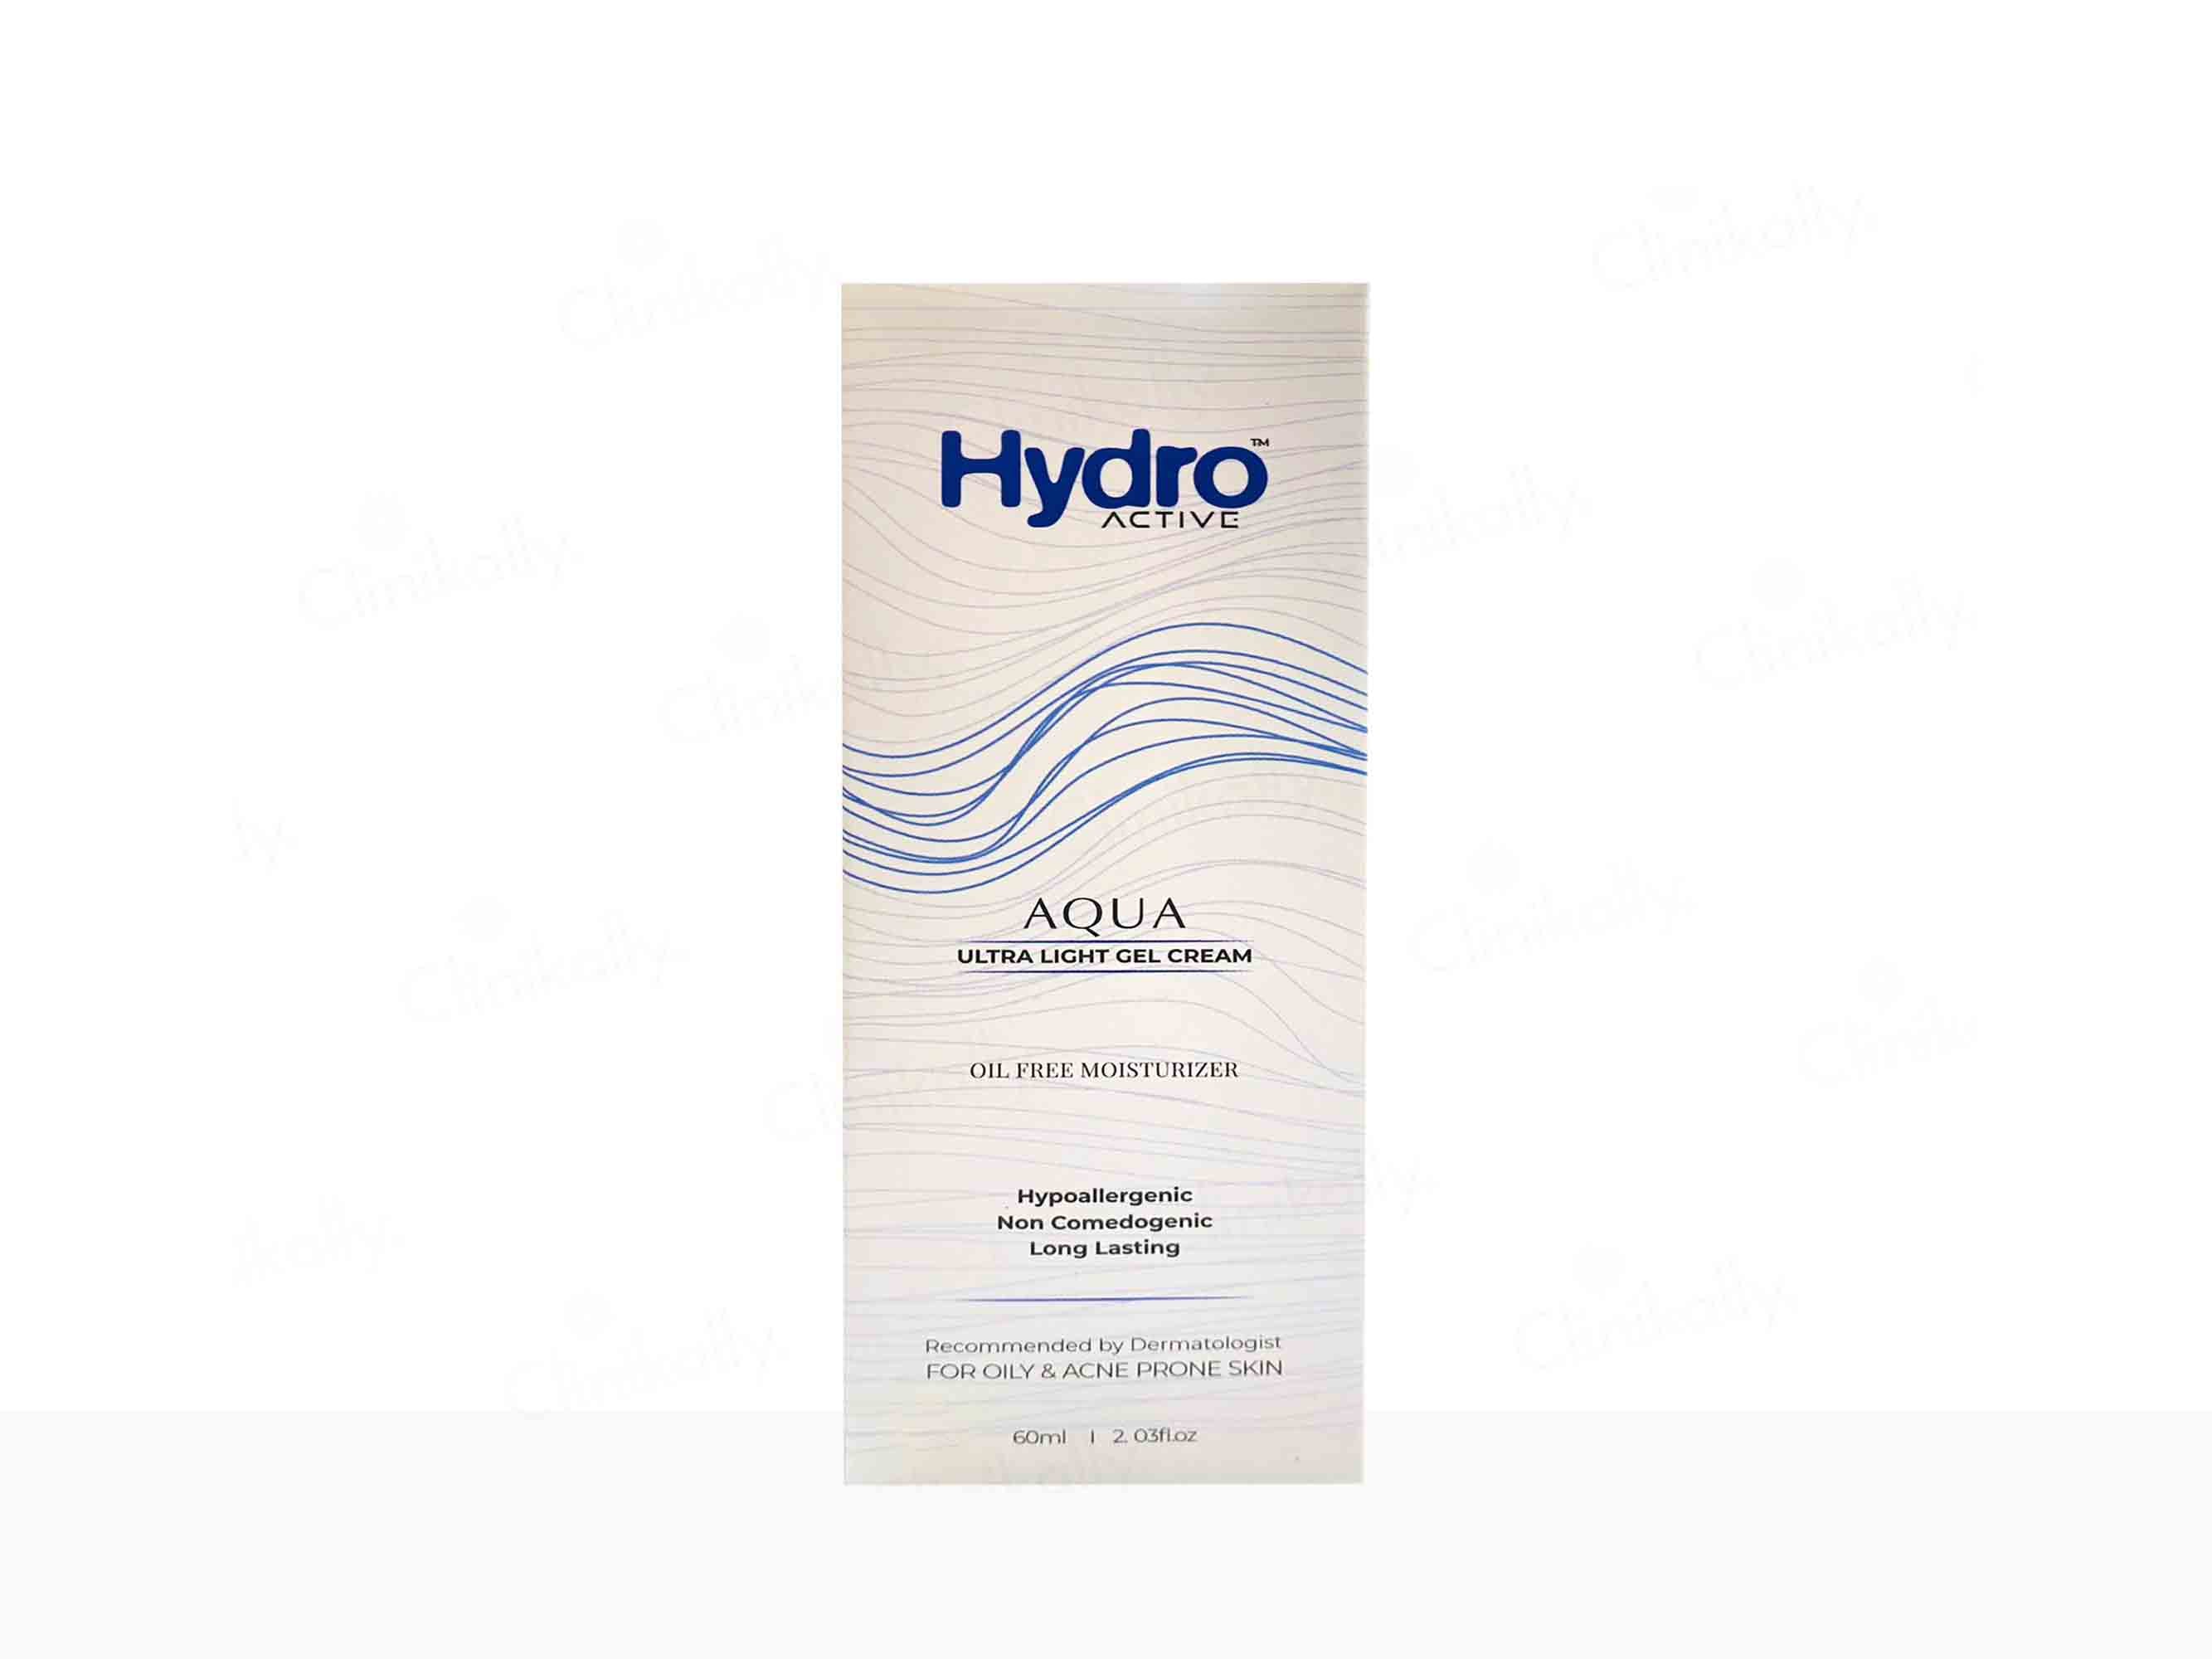 Hydro Active Aqua Ultra Light Gel Cream